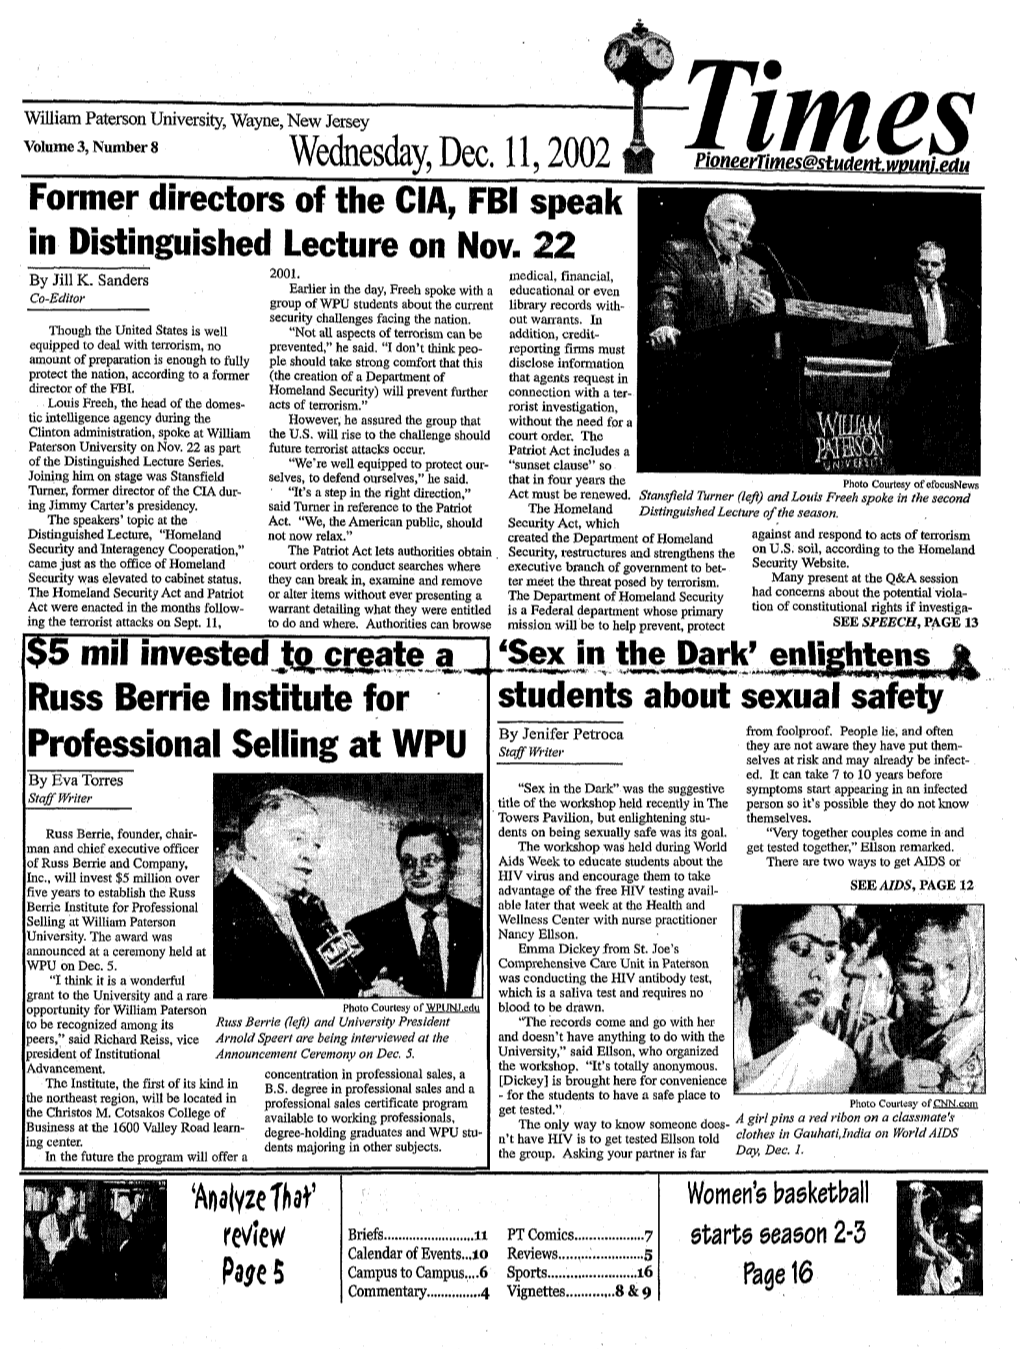 Former Directors of the CIA, FBI Speak in Distinguished Lecture on Nov. 22